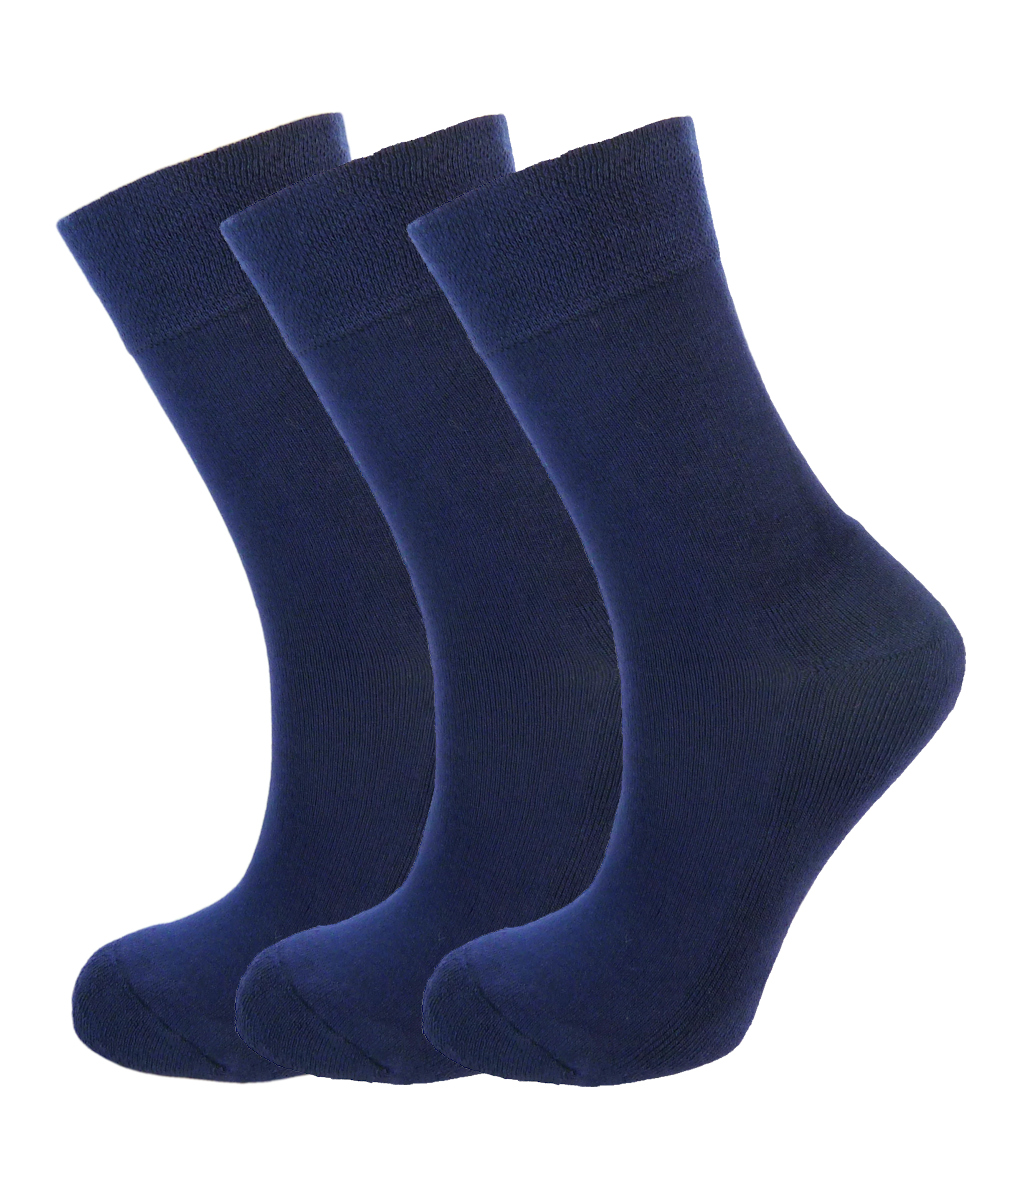 Wholesale Gentle Grips Socks, UK Wholesale Socks, Mens Gentle Grips, Ladies Gentle Grips